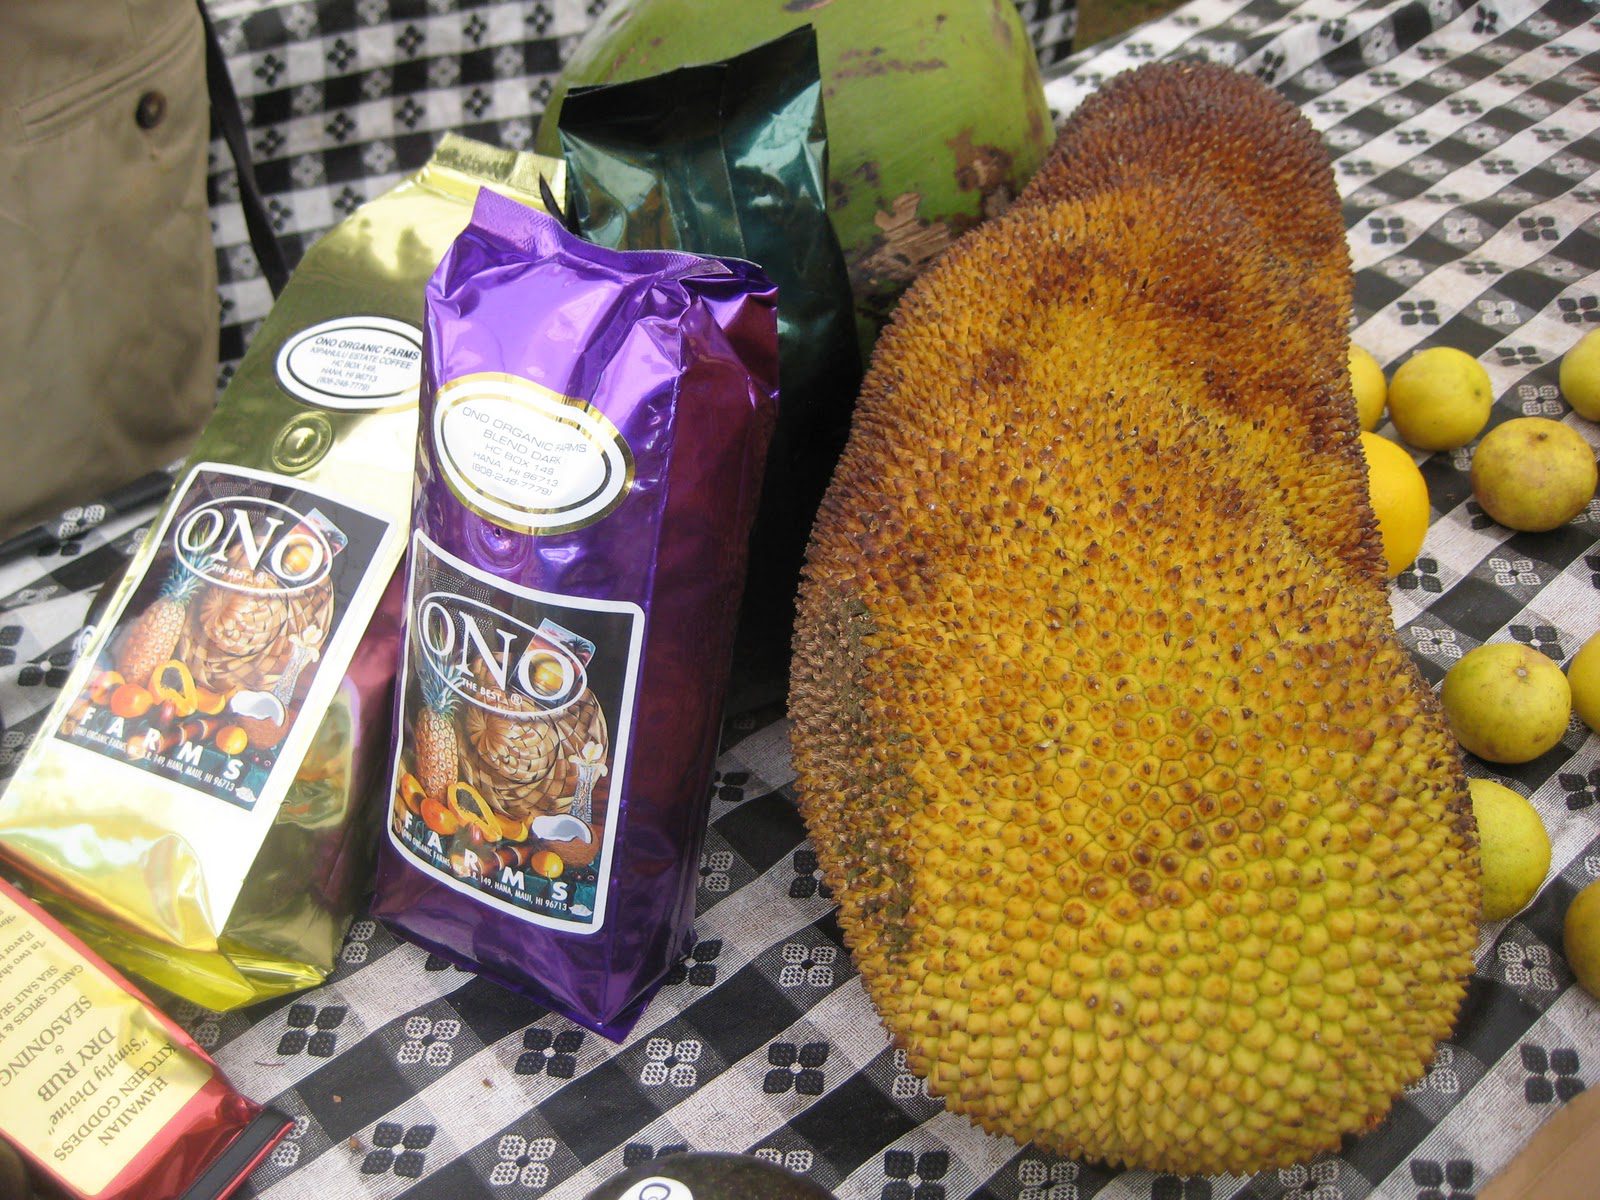 Maui Organic Farms - Jackfruit and coffee on a table for sale